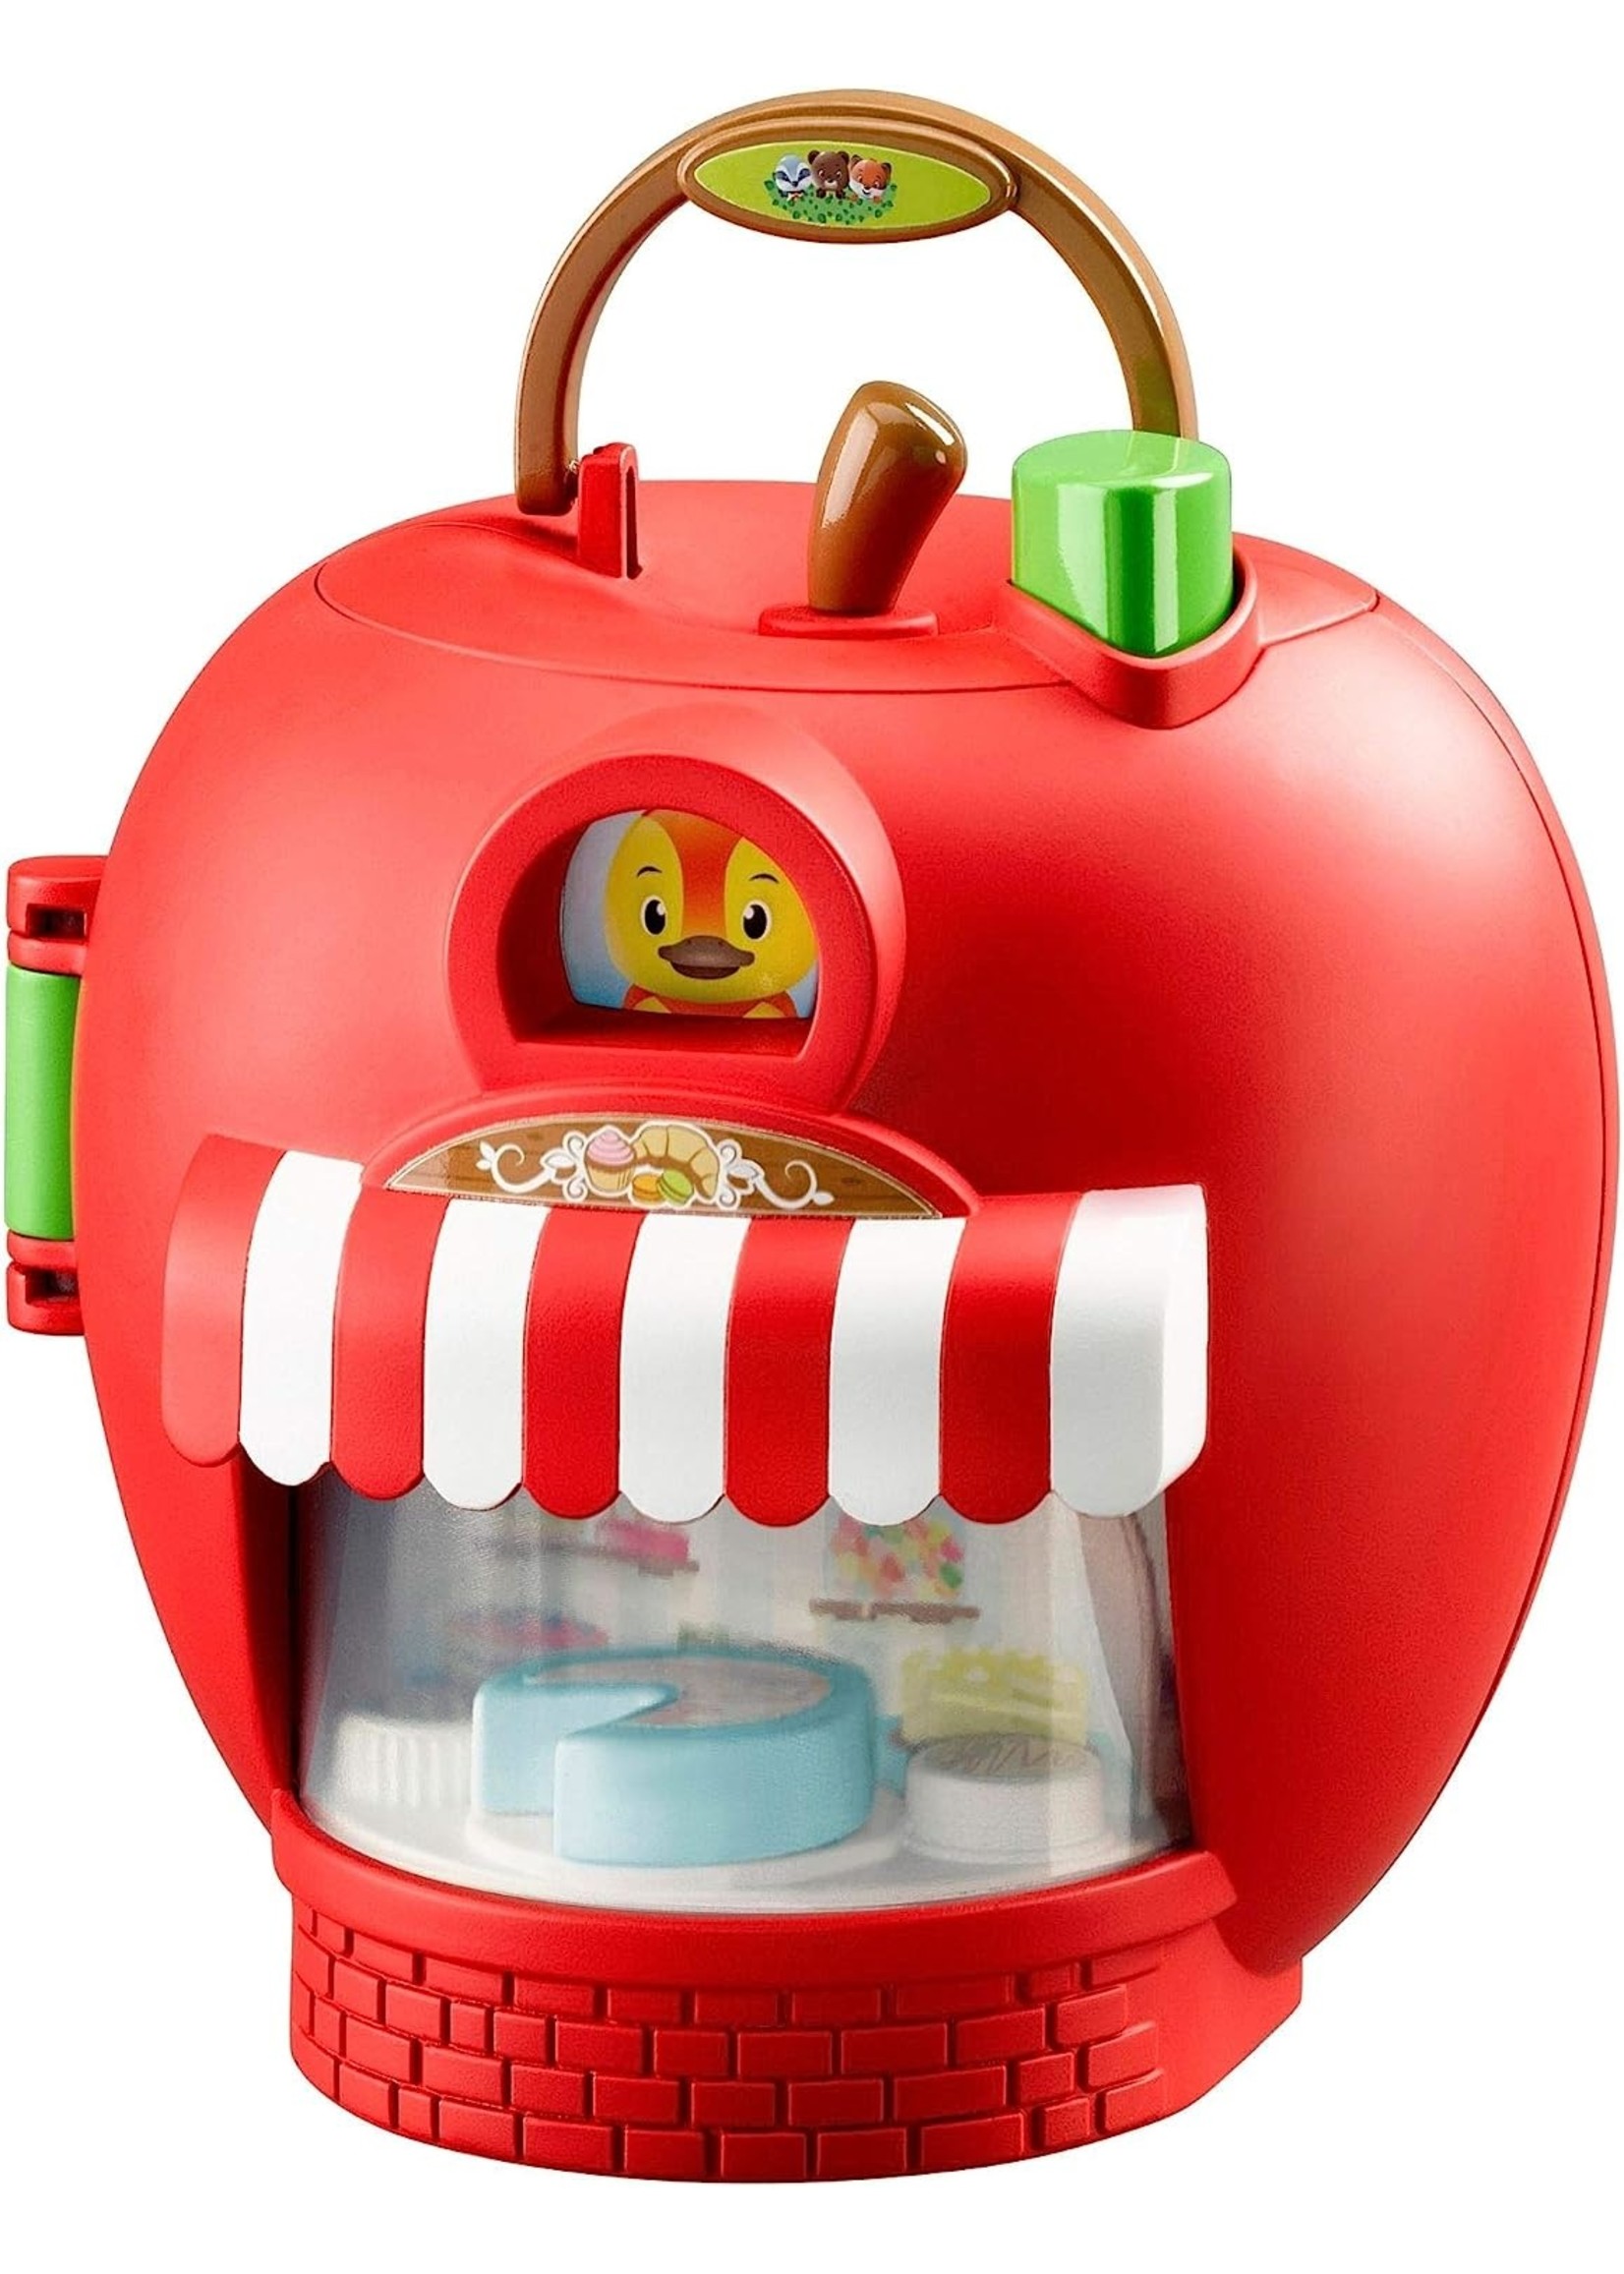 Fat Brain Toys Apple Delight Bakery